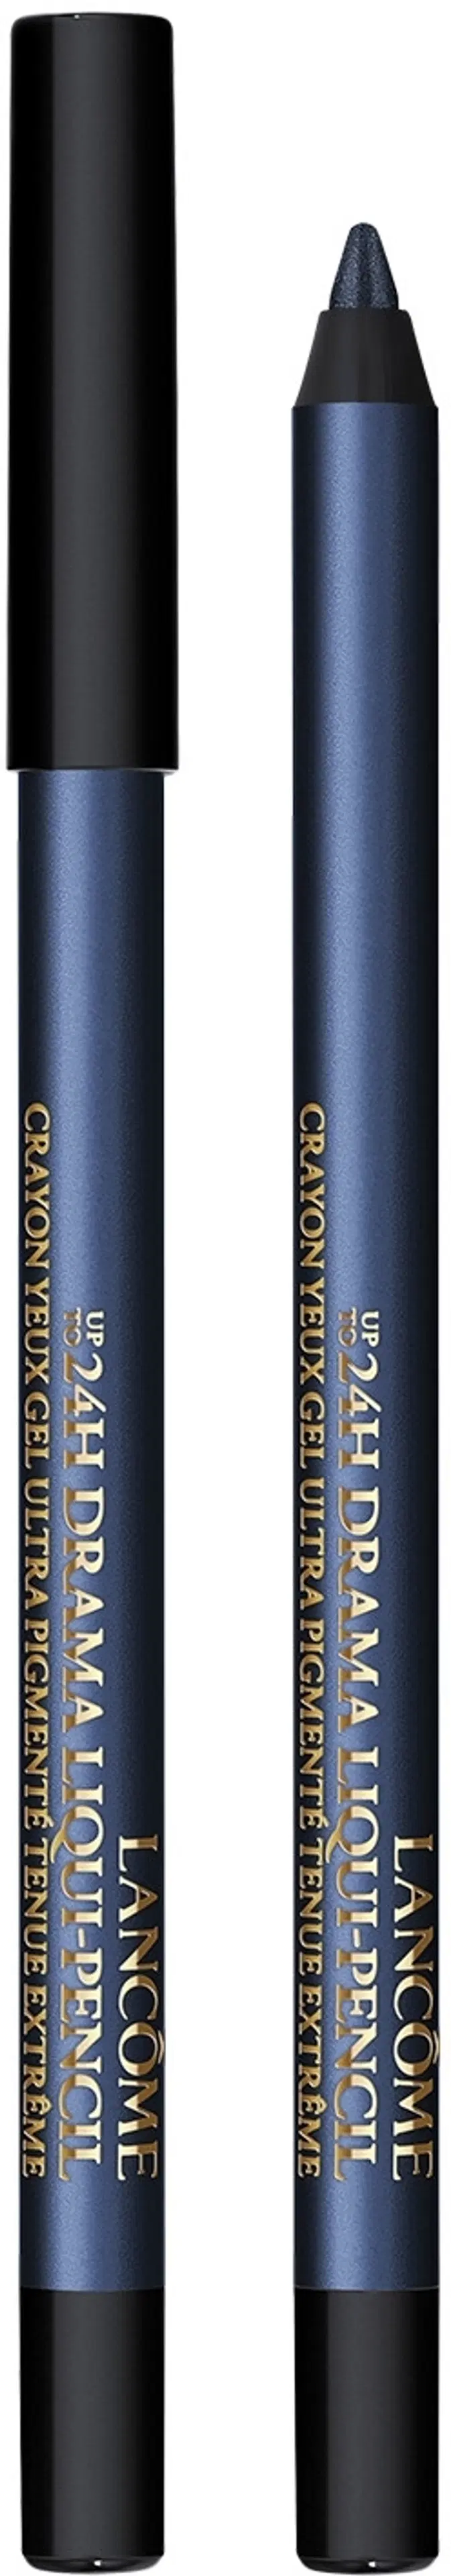 Lancôme 24H Drama Liquid Pencil rajauskynä 1,2 g